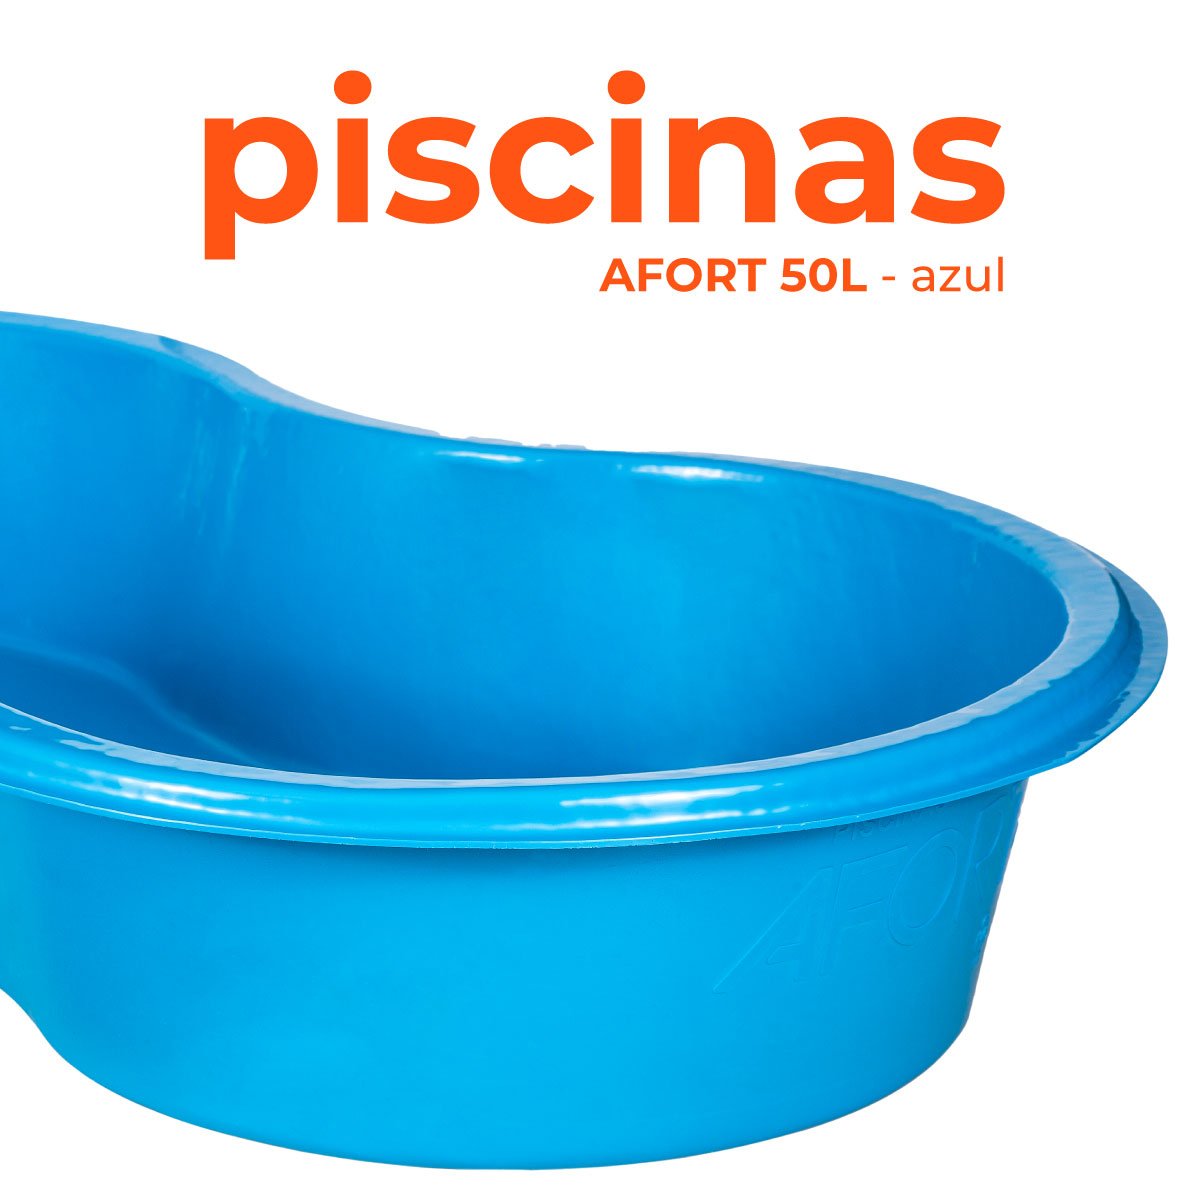 Piscina Azul 50l - Afort - 2